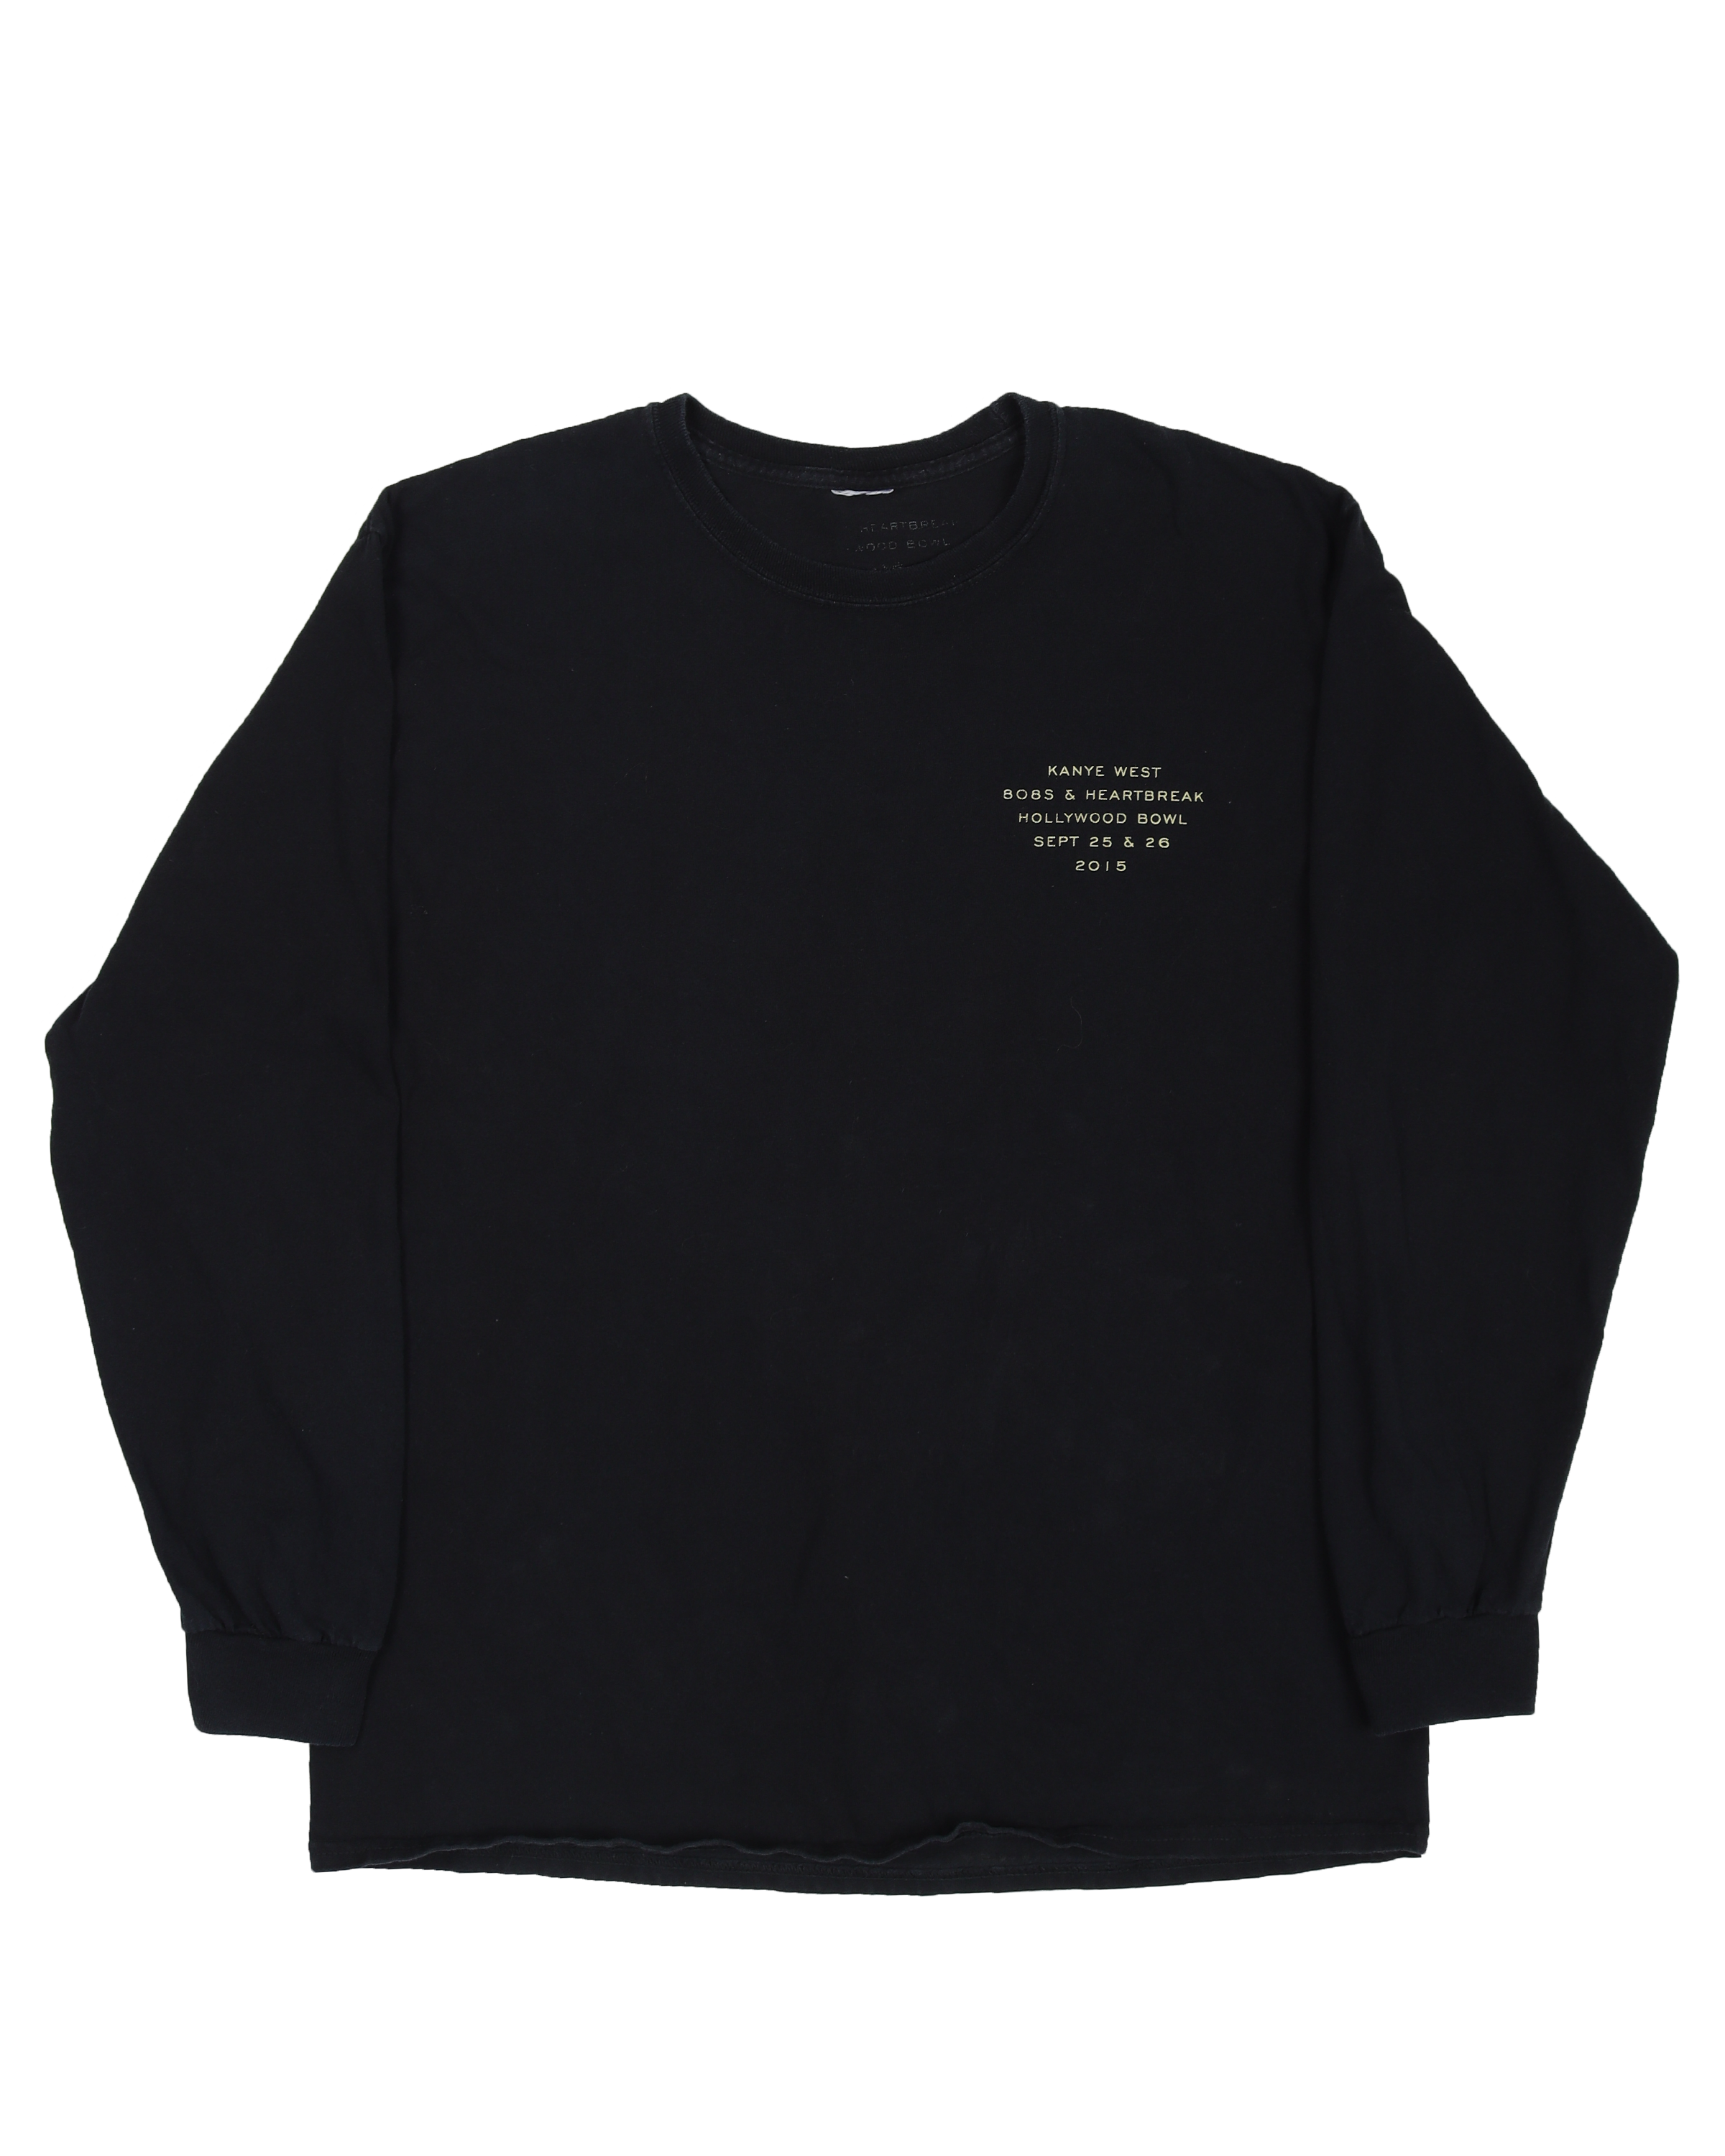 Kanye West "808s & Heartbreak" Tour 2015 Long-Sleeve T-Shirt